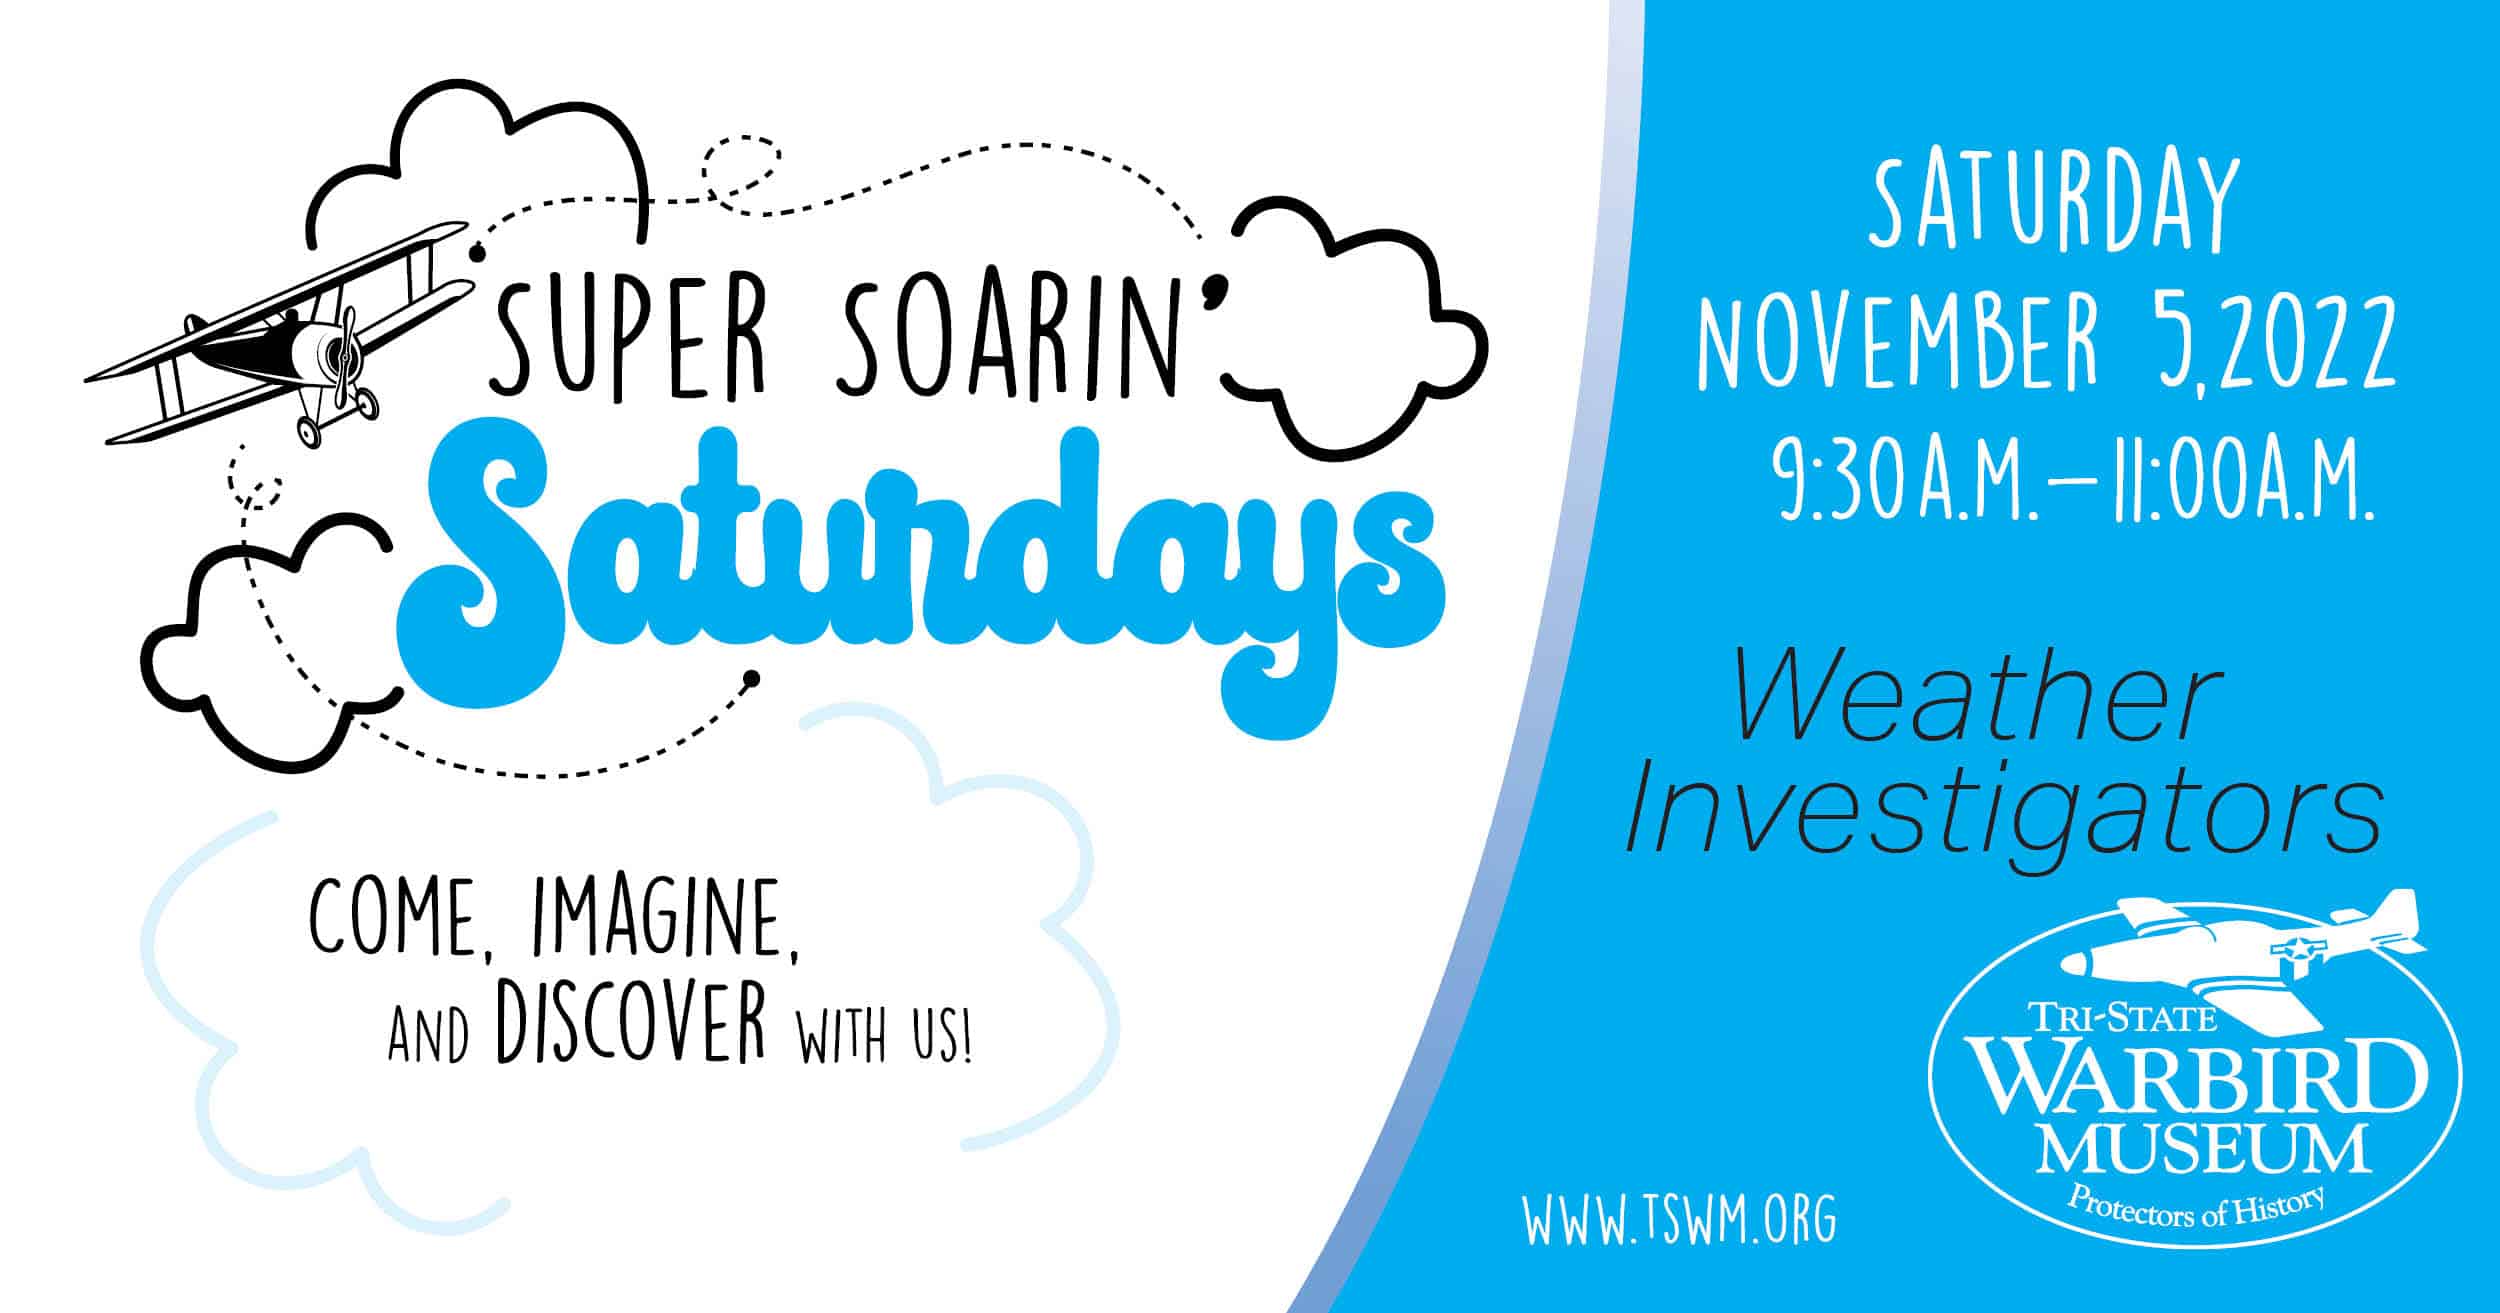 Super Soarin Saturdays November 5 2022 weather investigators